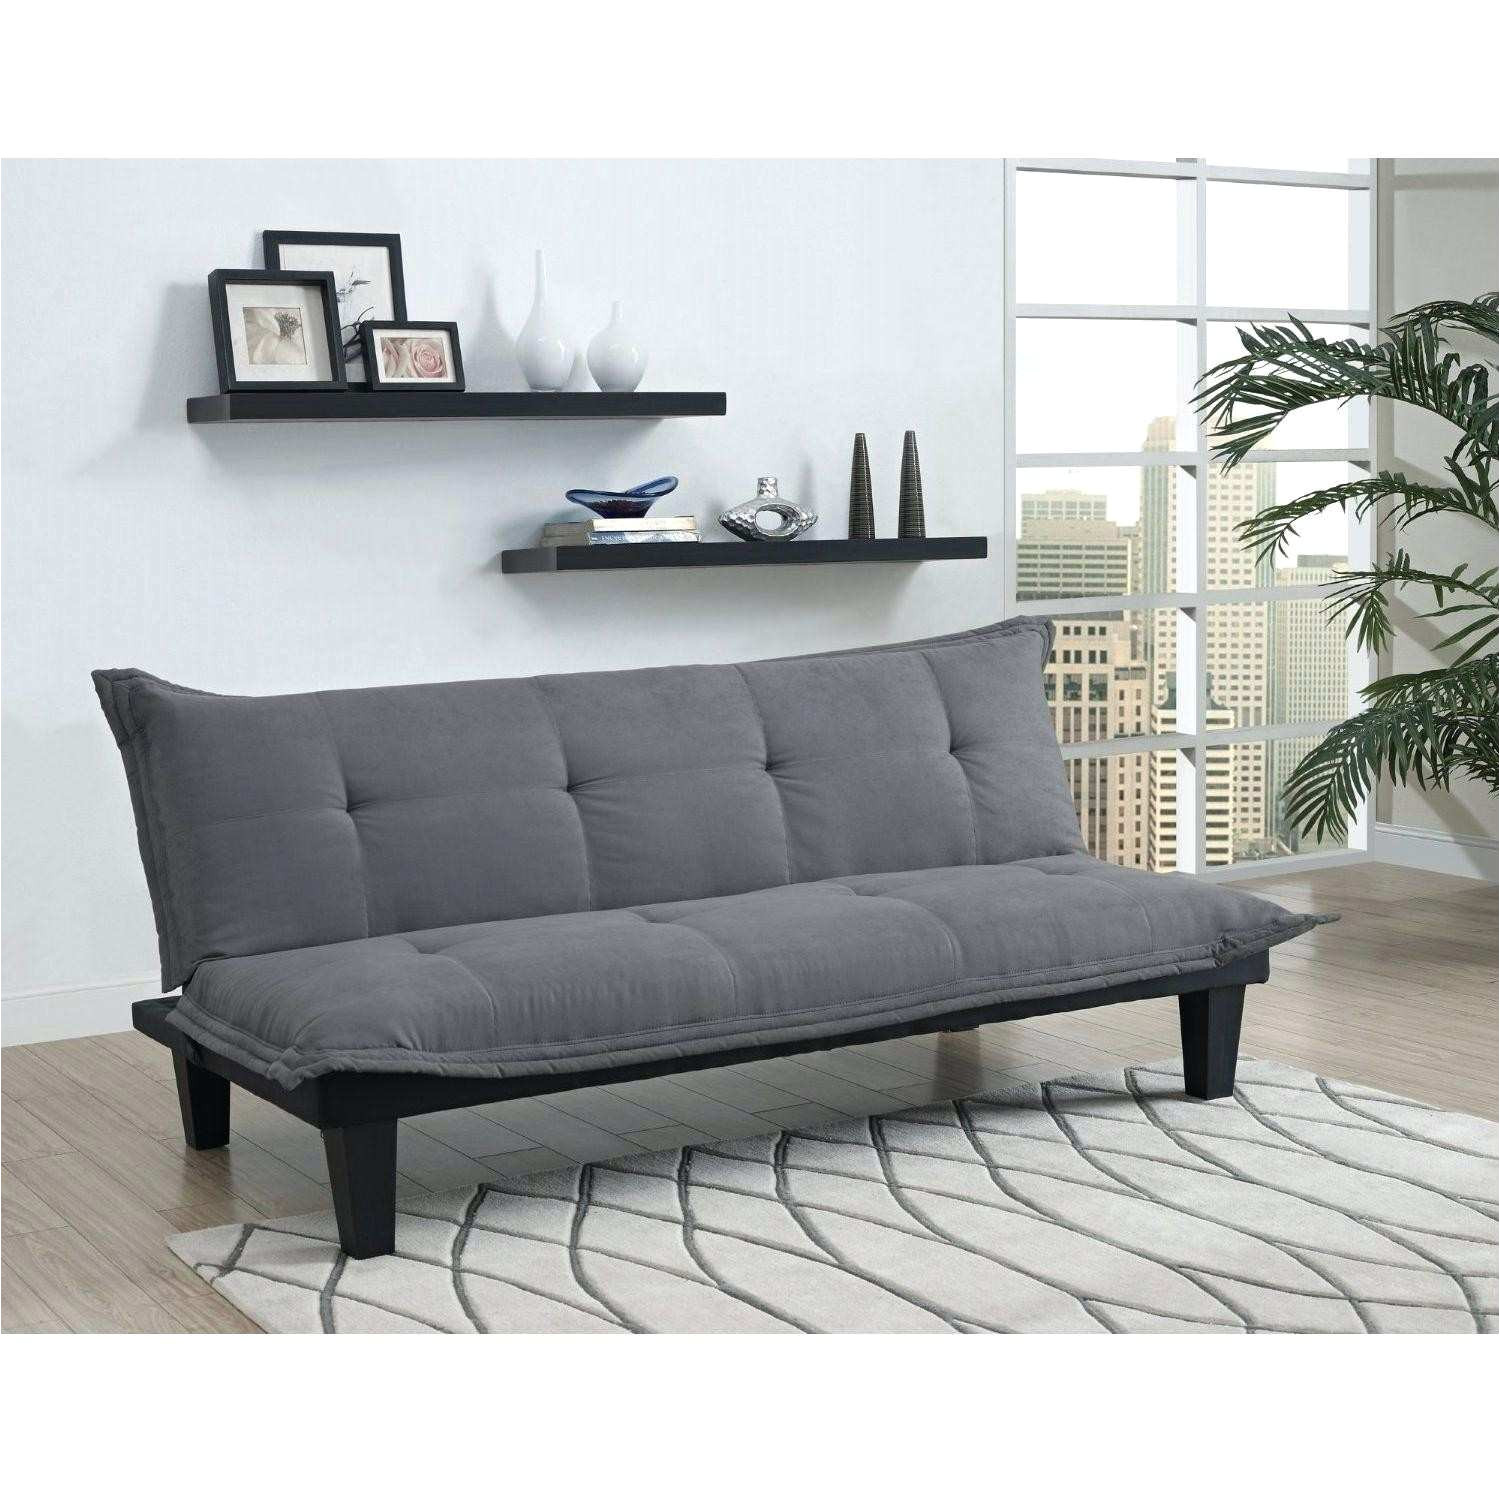 foldable bed frame queen luxury futon new leather futon sofa fresh luxurios wicker outdoor sofa 0d